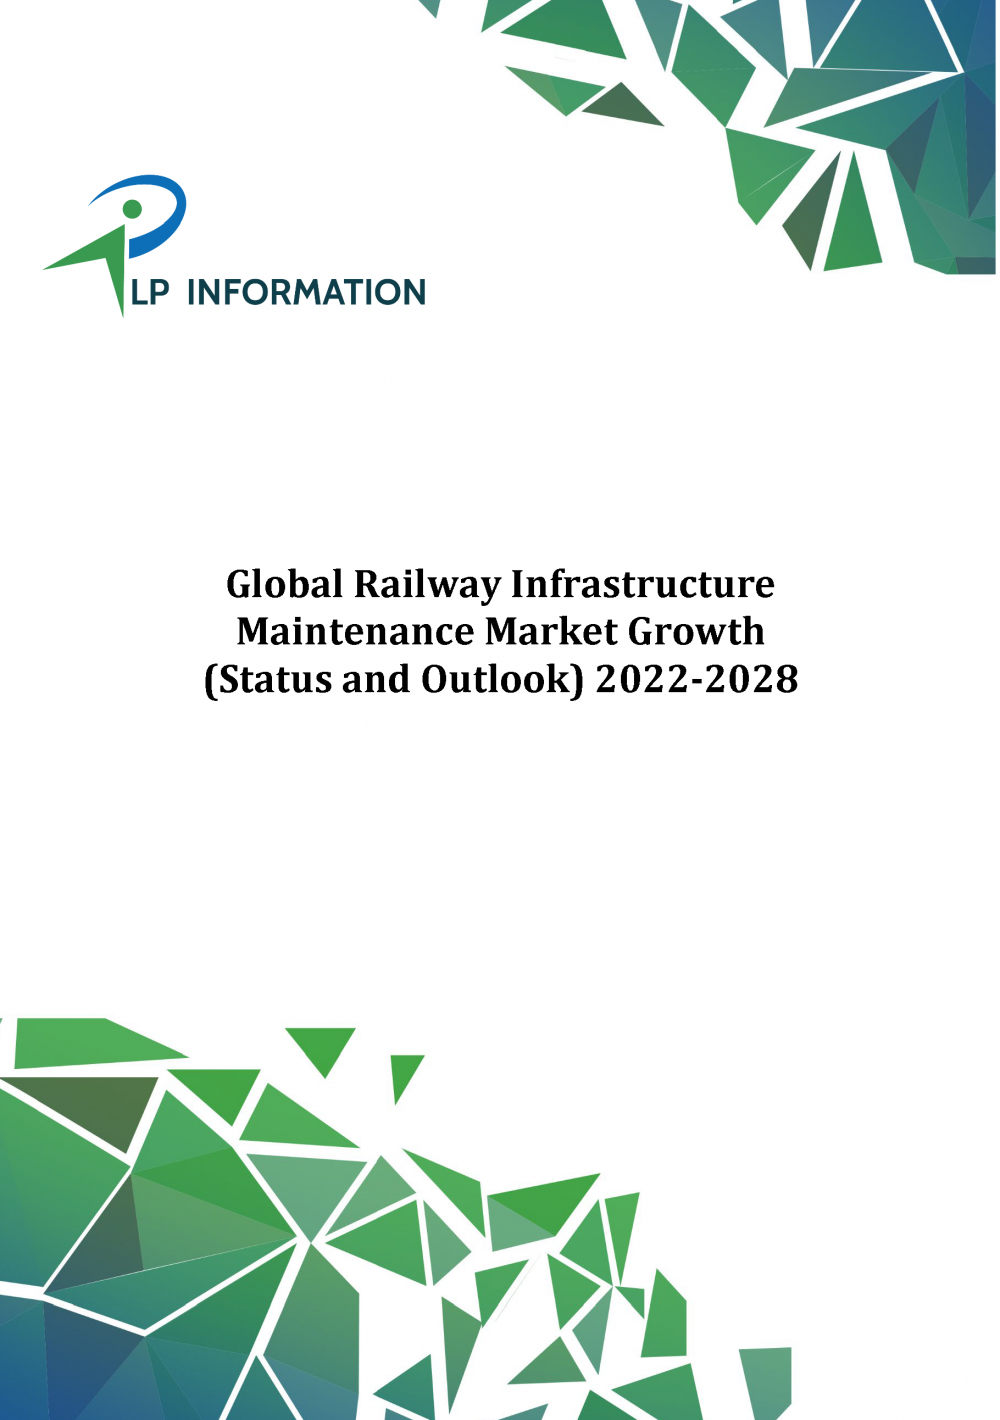 Global Railway Infrastructure Maintenance Market Growth 2022-2028